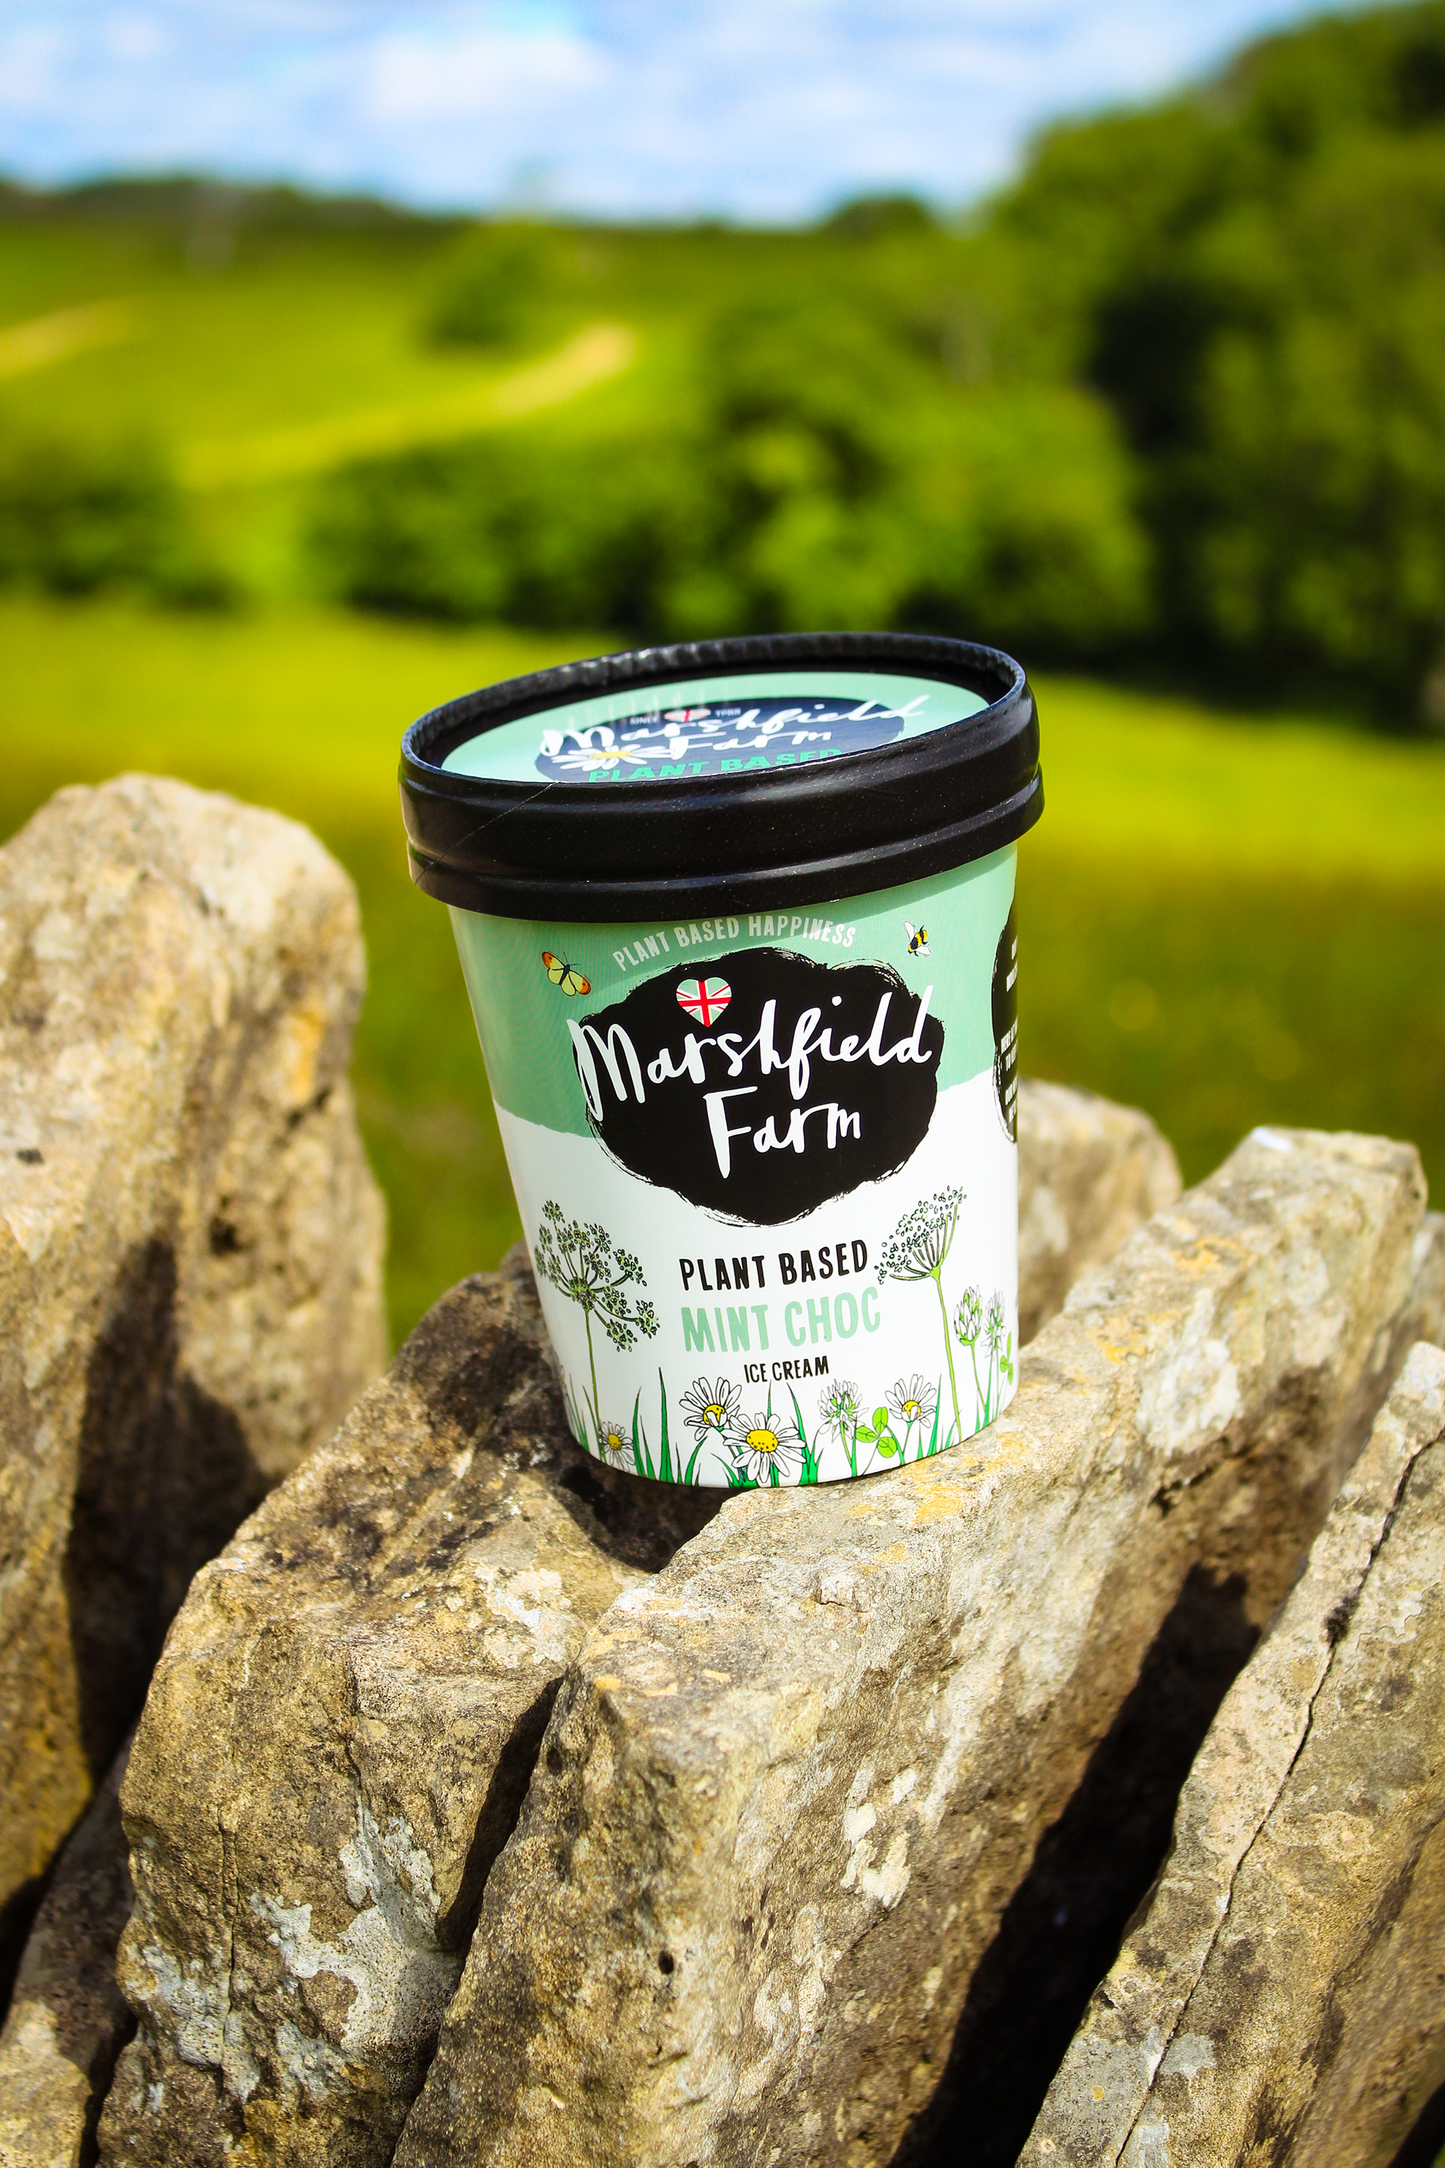 Marshfield Farm Plant Based Mint Choc Ice Cream 500ml Tub